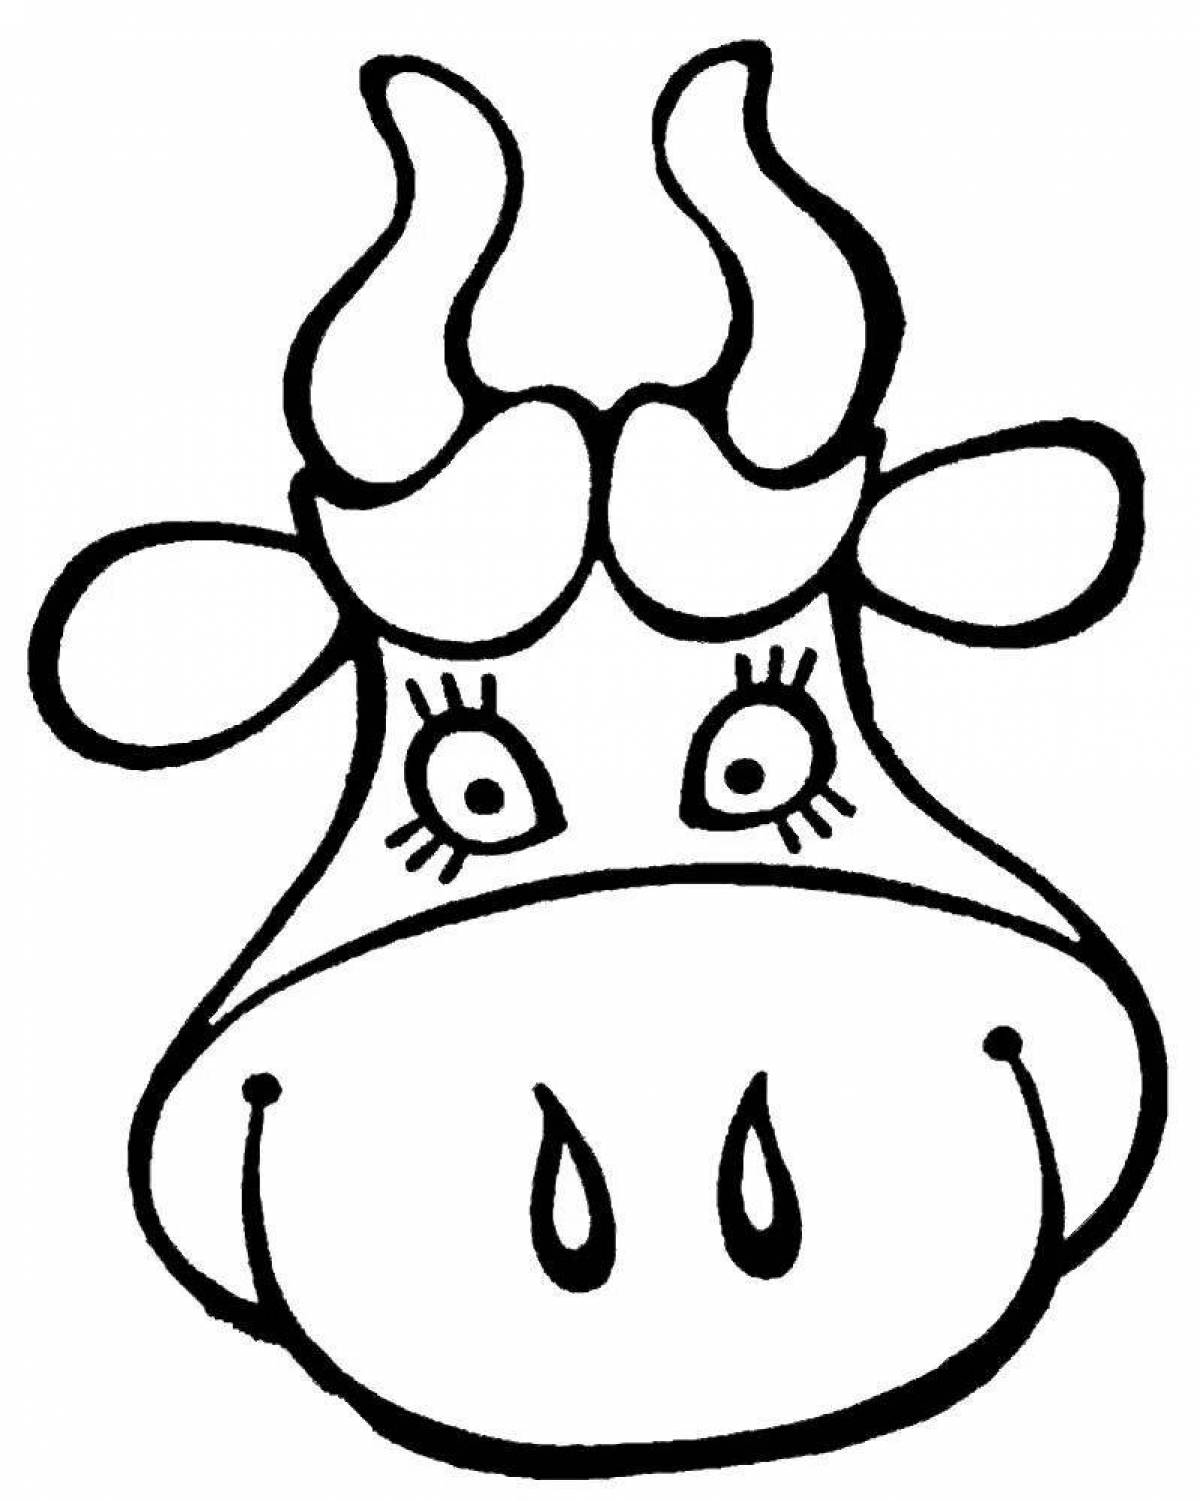 Fun cow head coloring page